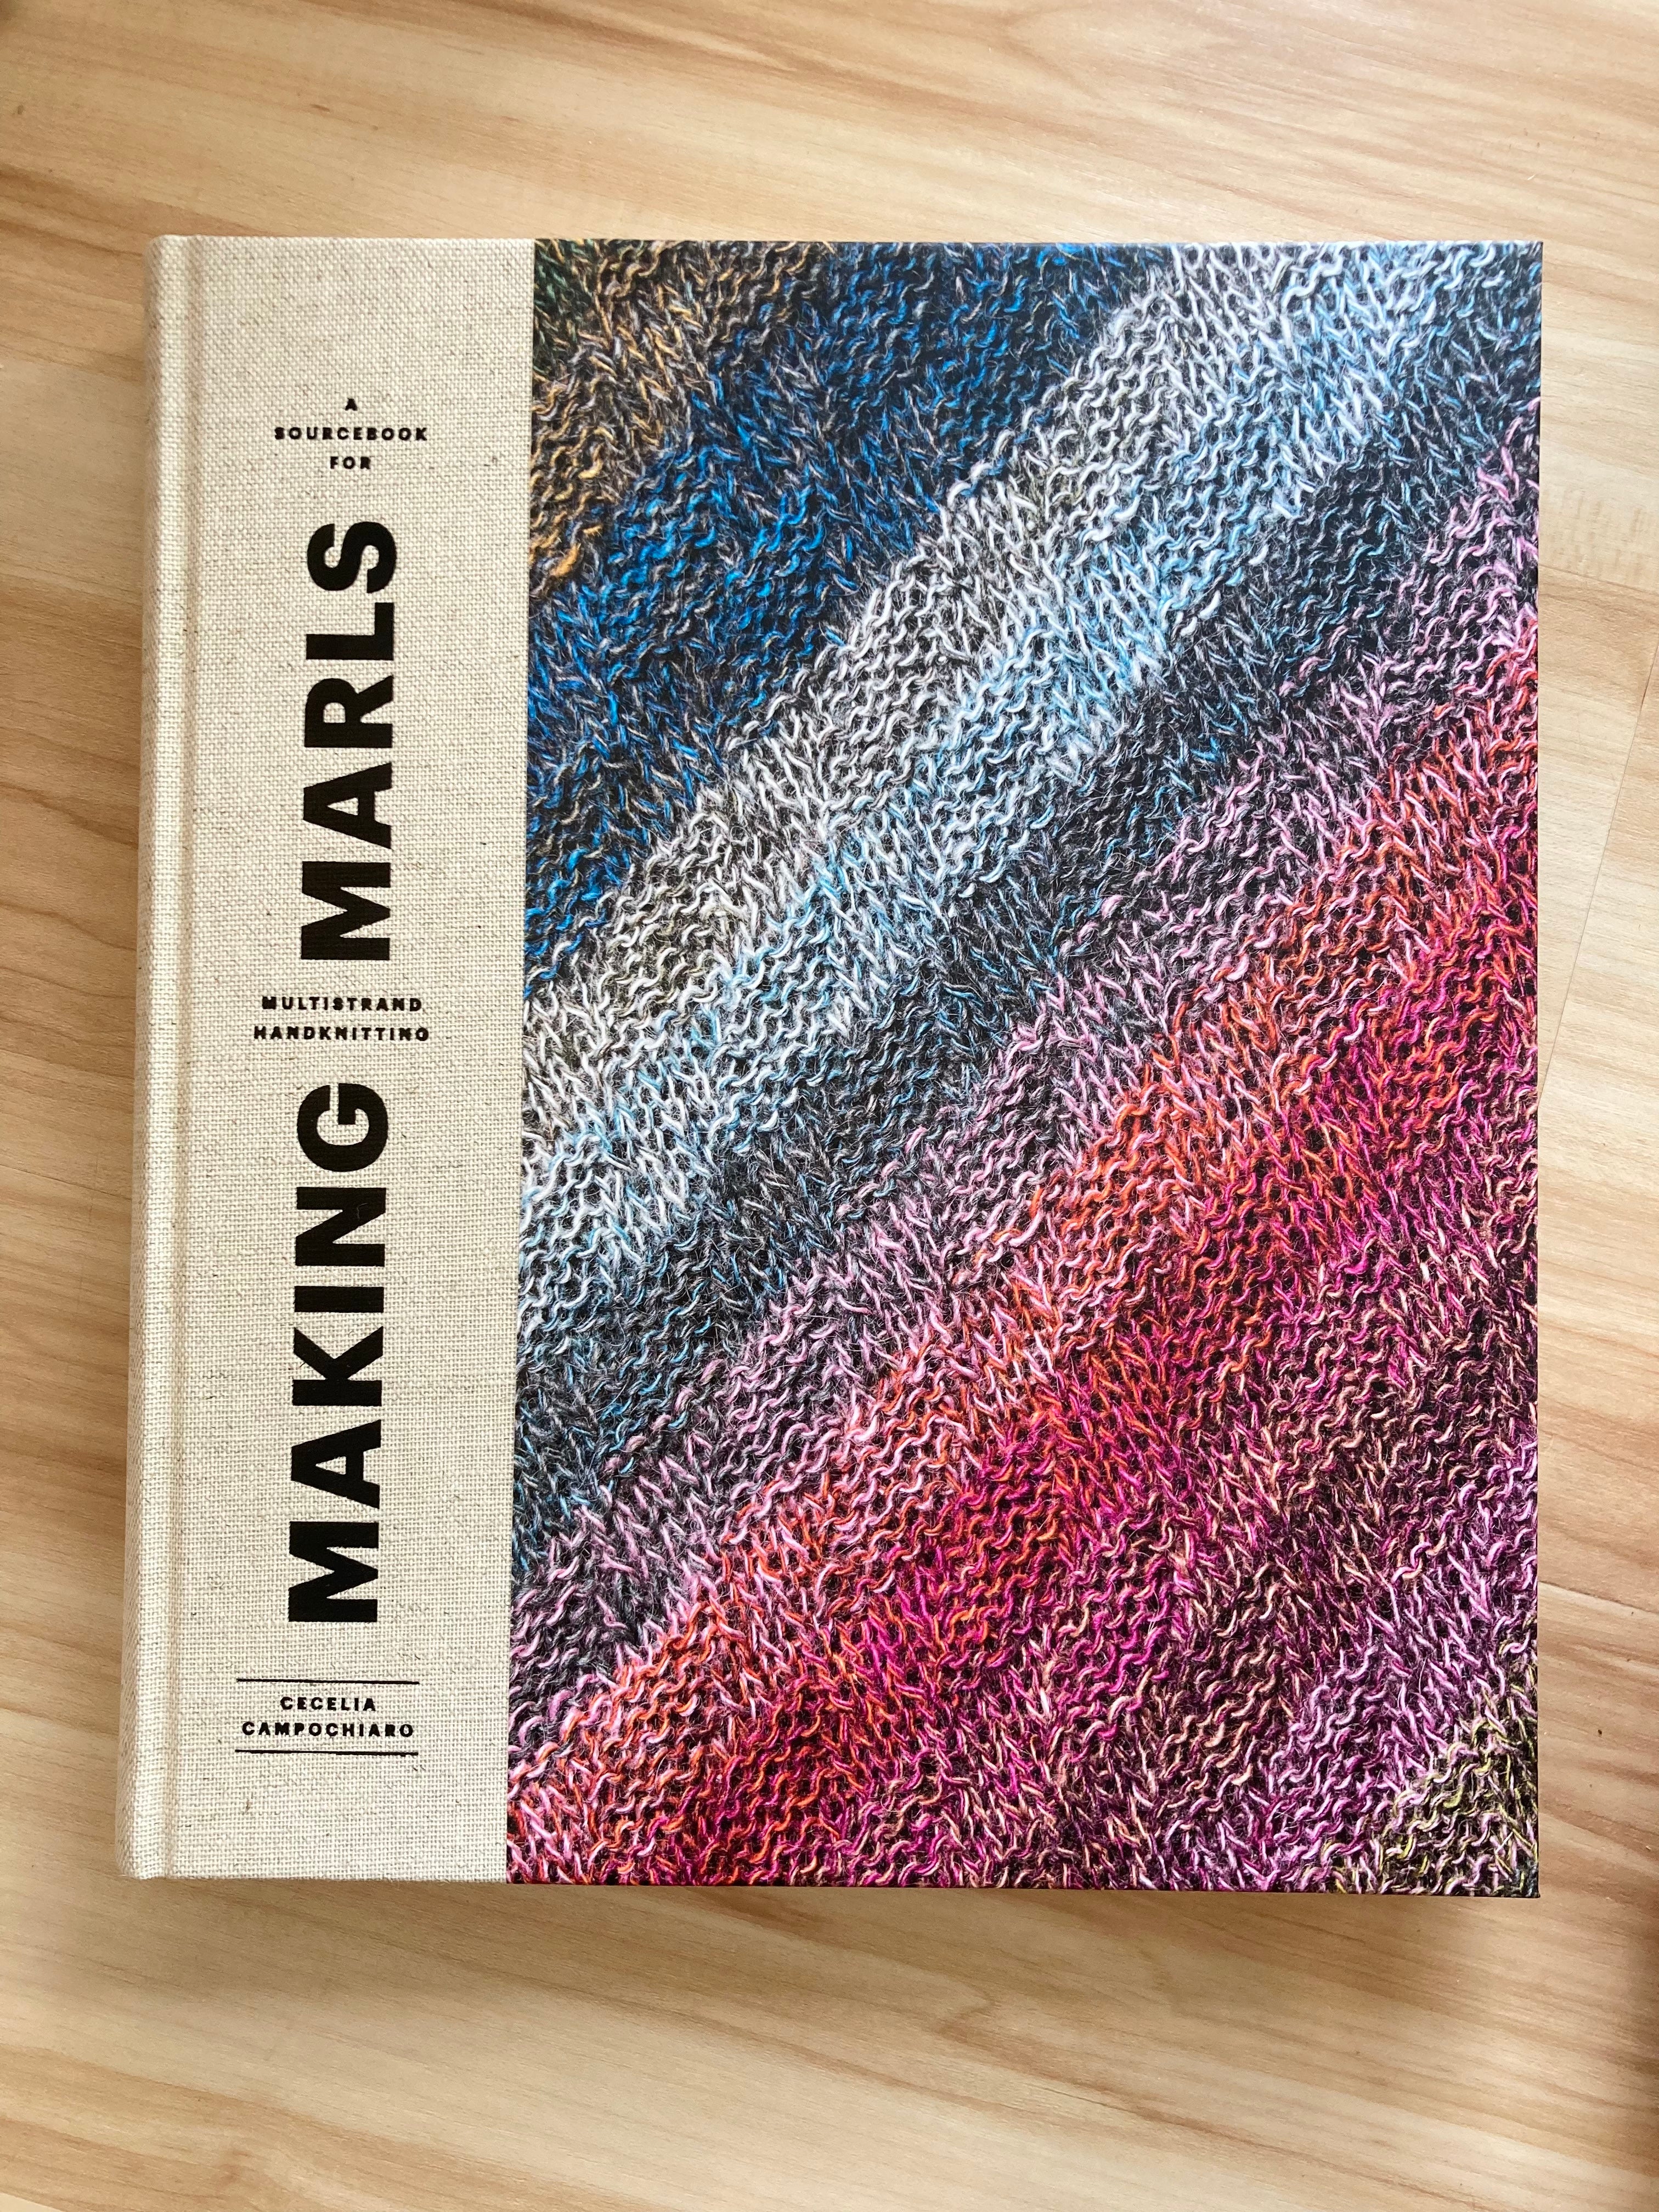 Making Marls book by Cecelia Campochiaro